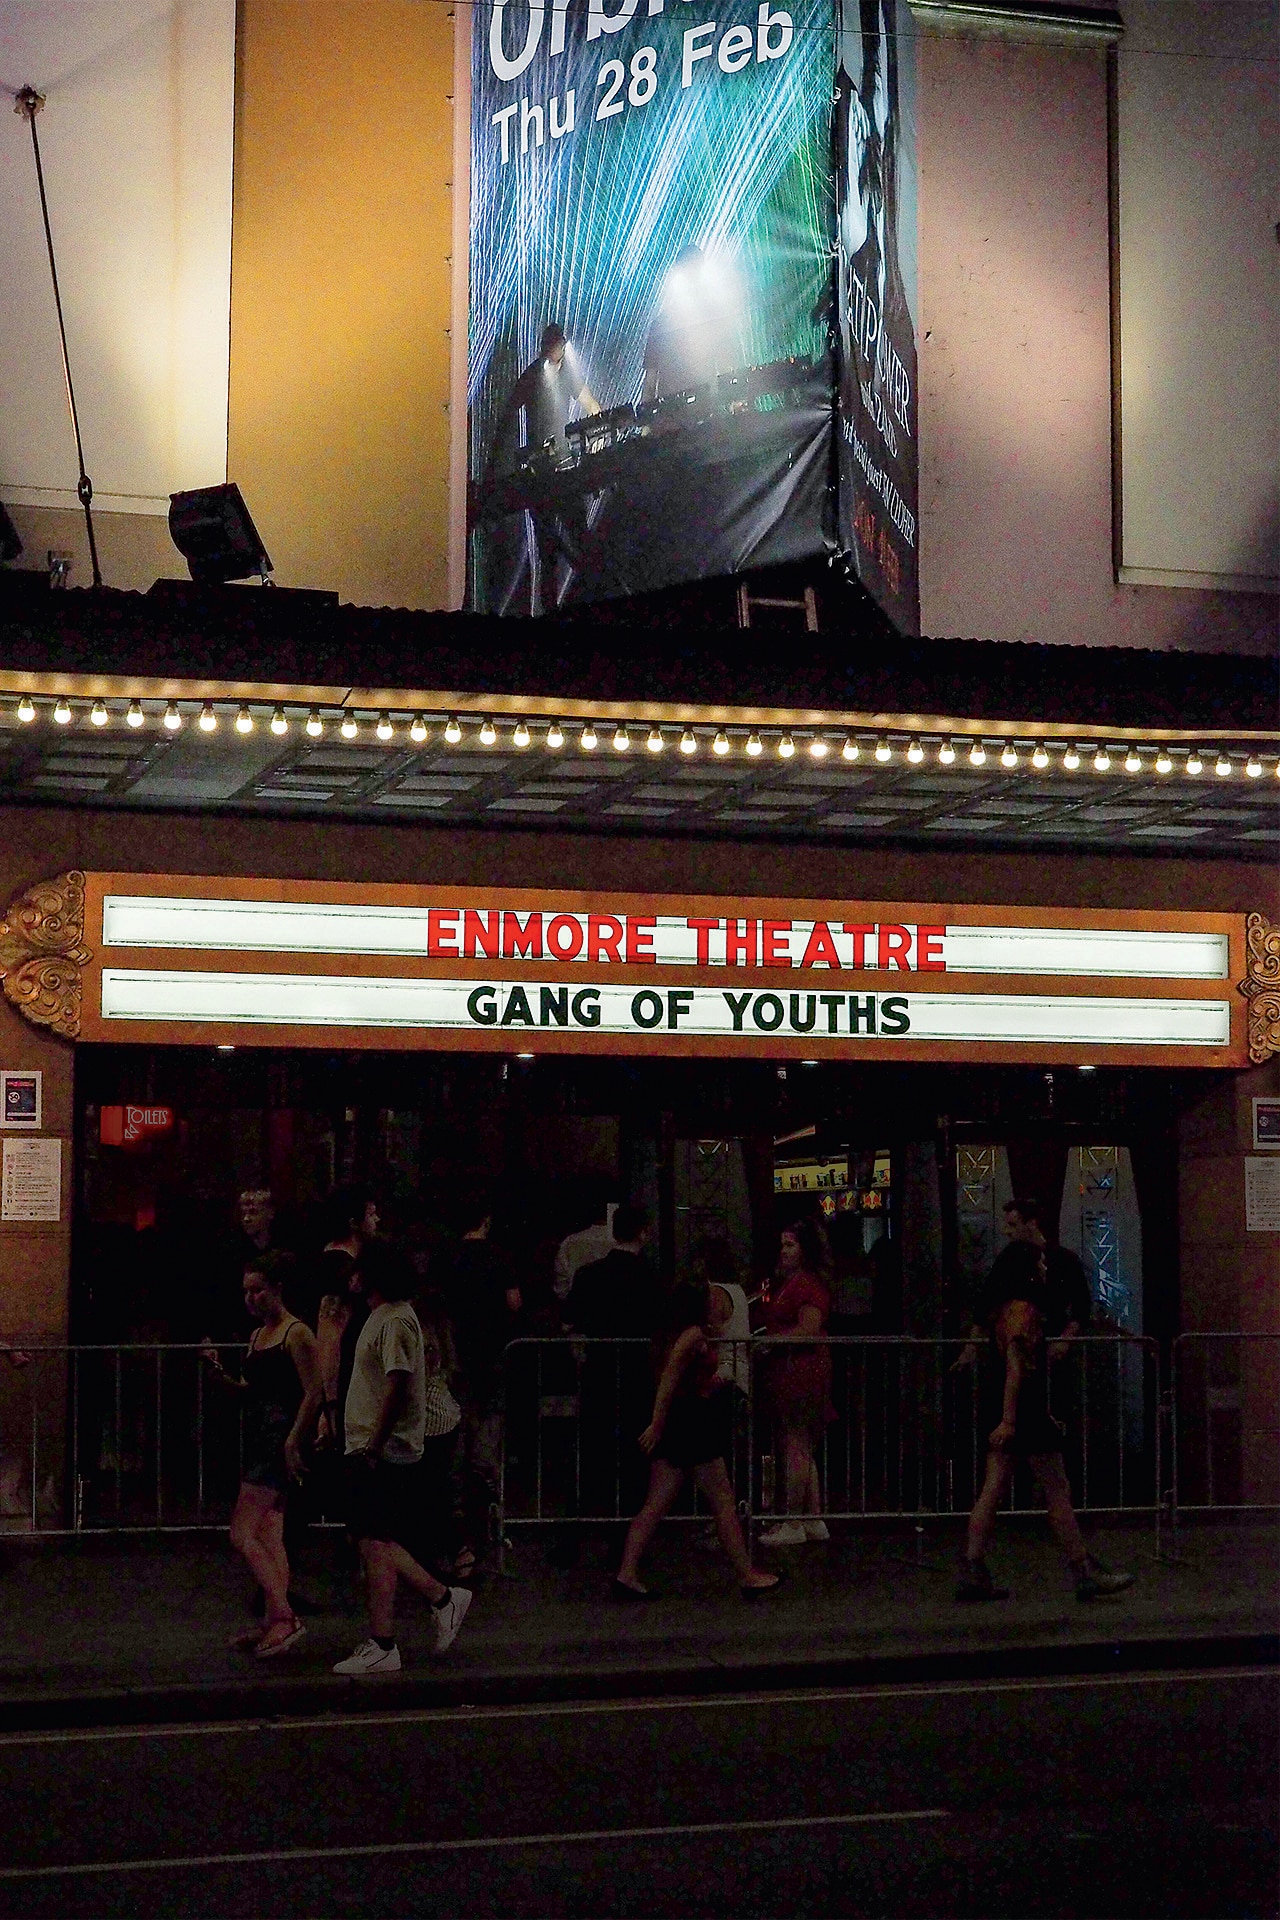 Coldplay – True Love (Live at the Enmore Theatre, Sydney) Lyrics